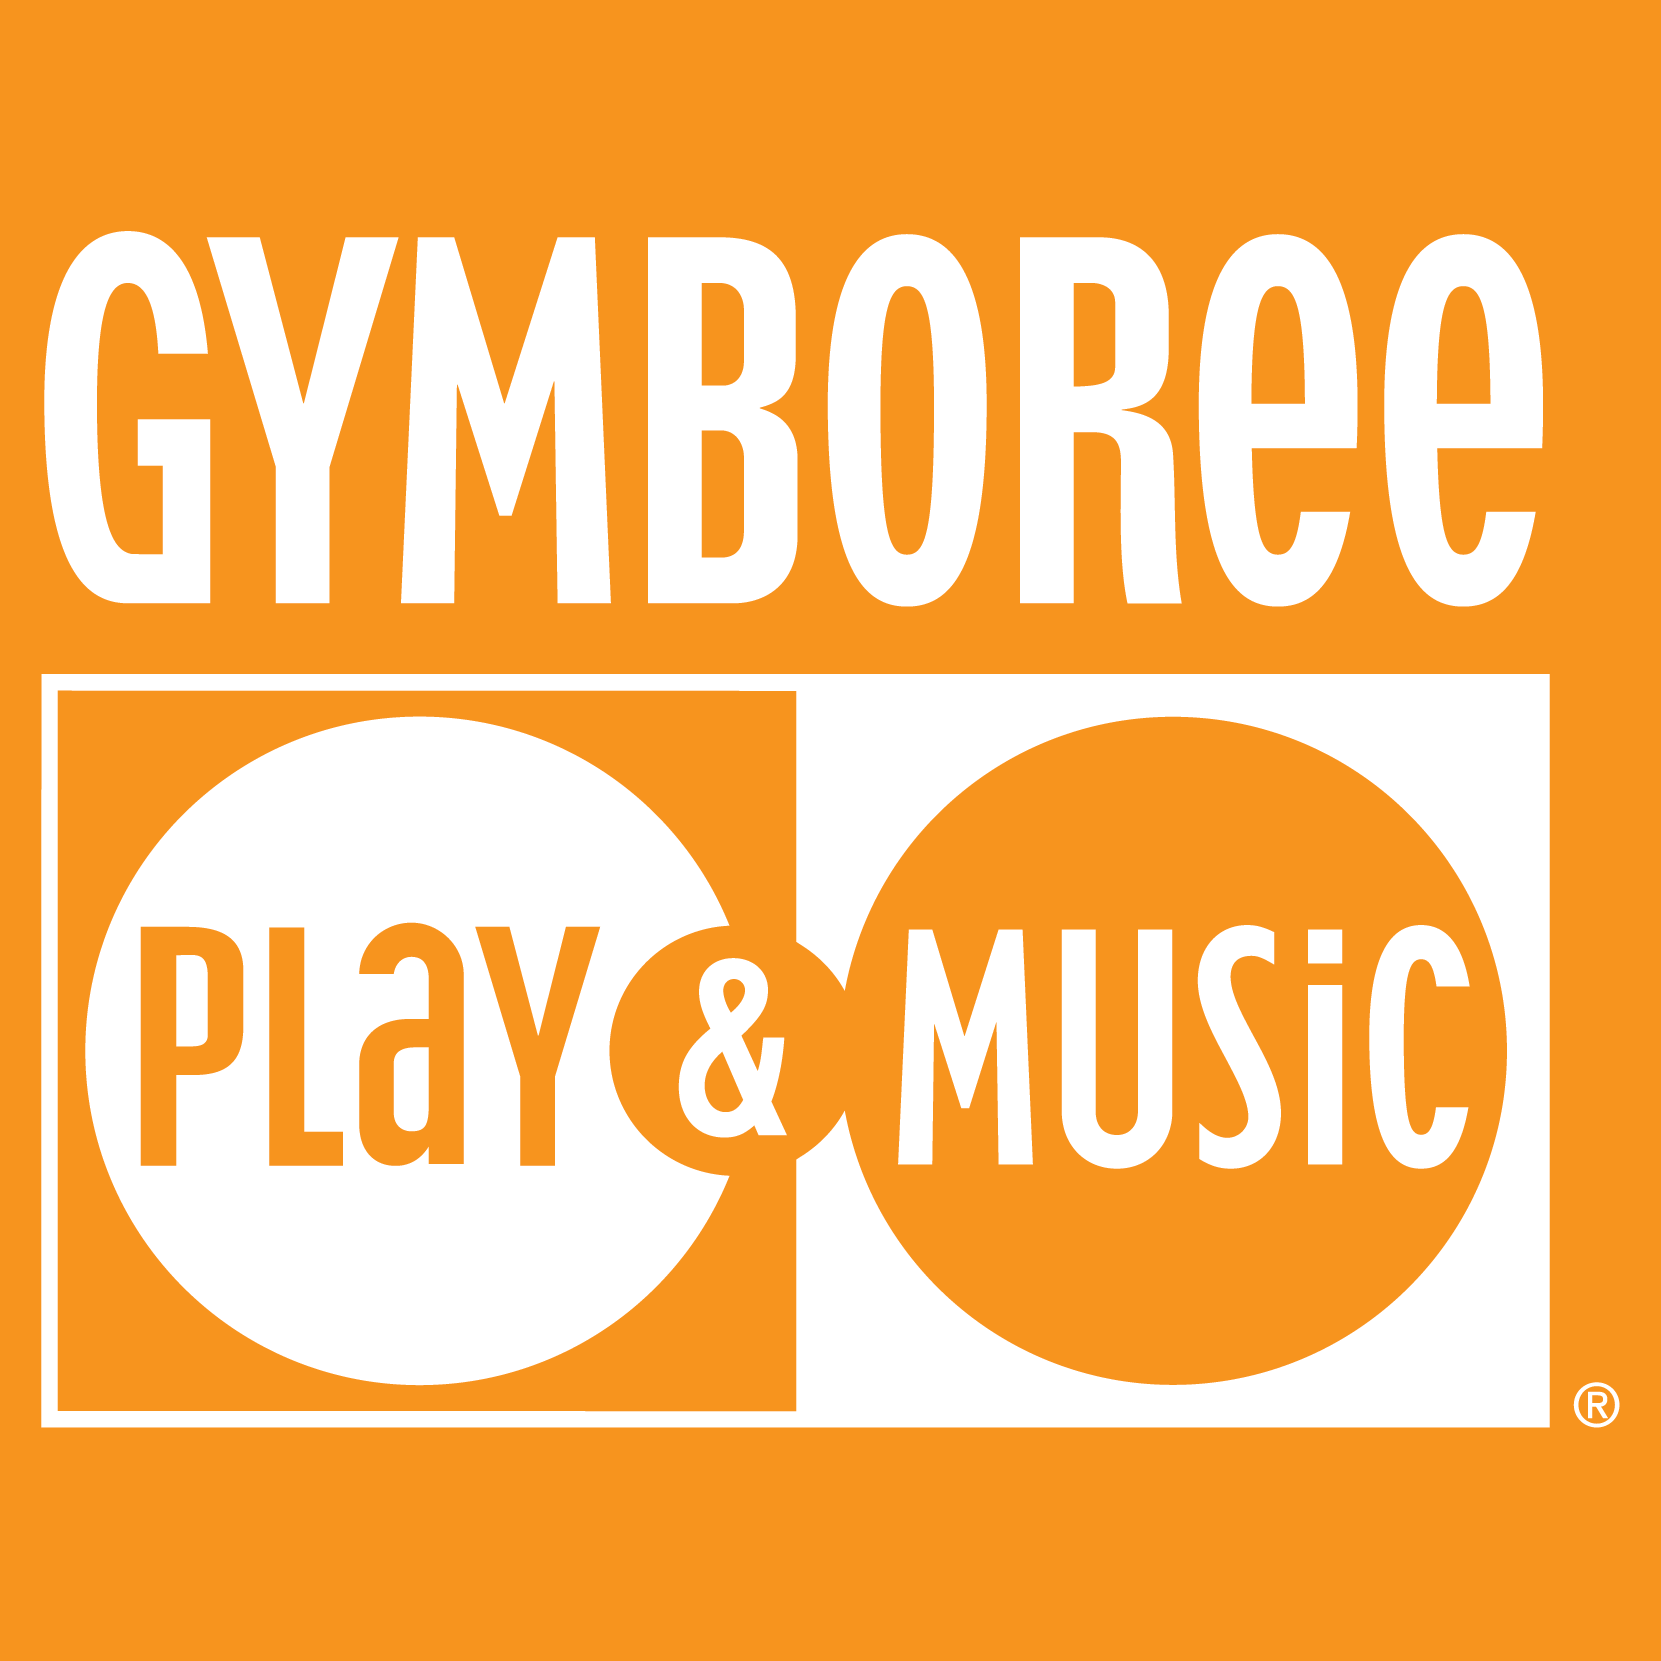 HD Wallpaper Gymboree Play And Music Logo Animated Wallpaper.ikik.info